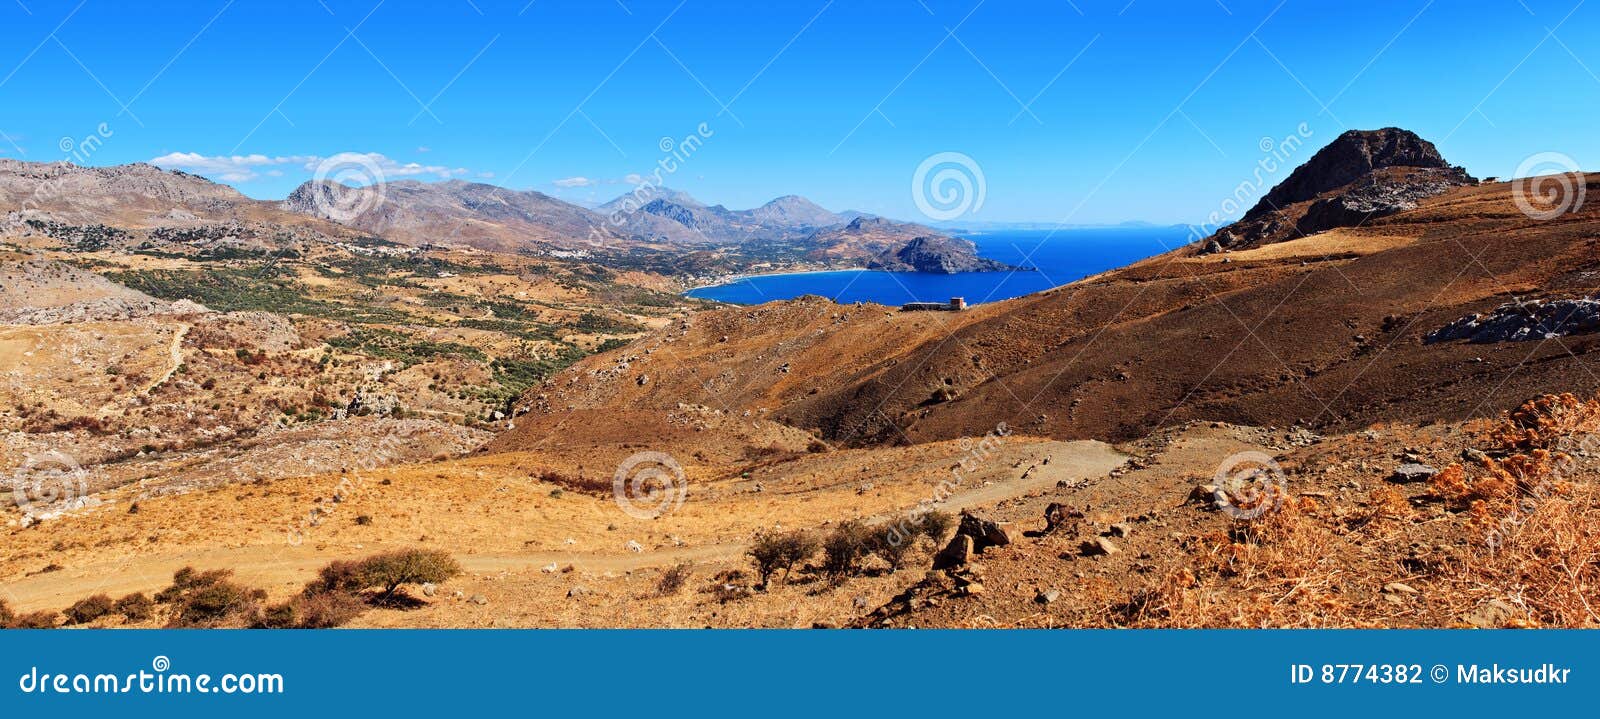 pano of crete island